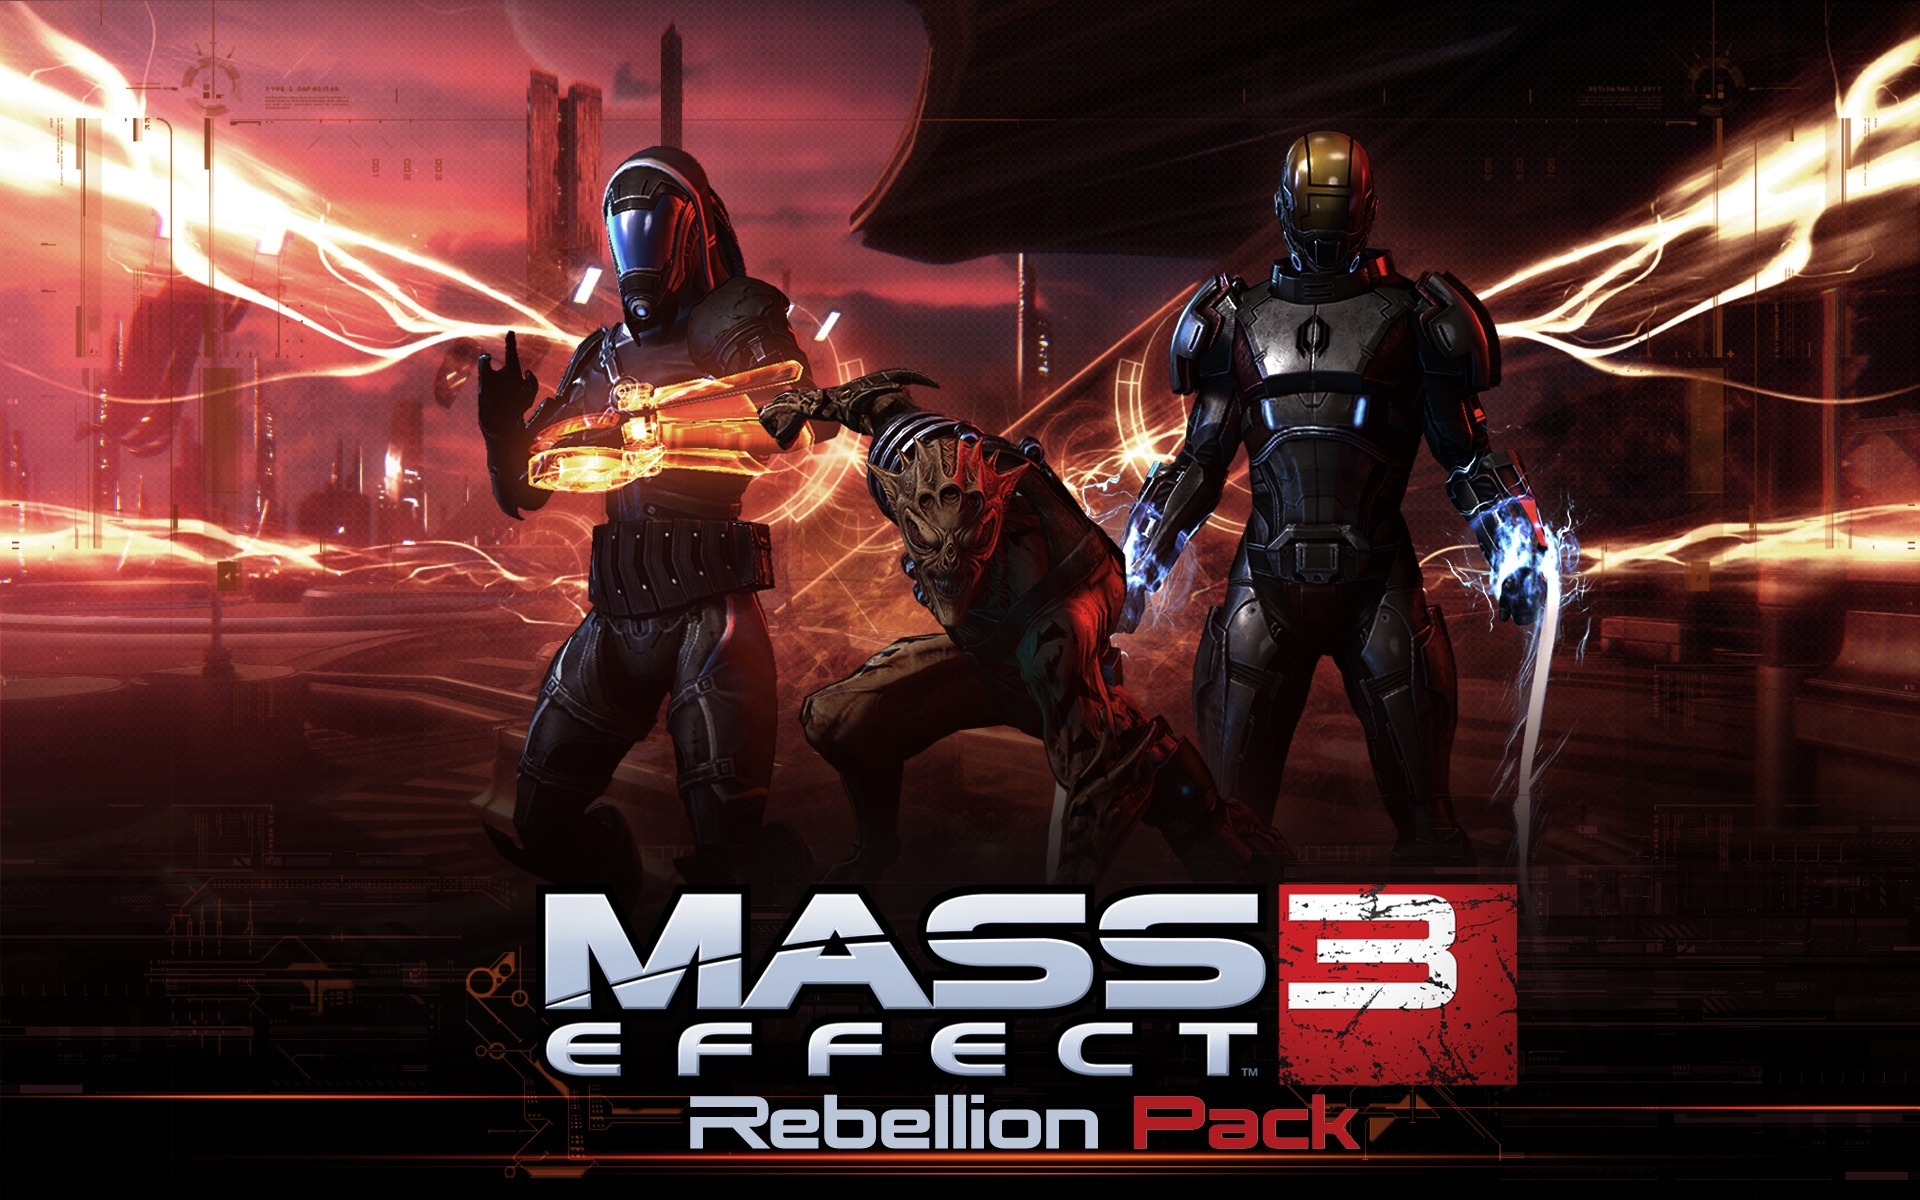 Mass Effect 3 Rebellion Pack for 1920 x 1200 widescreen resolution